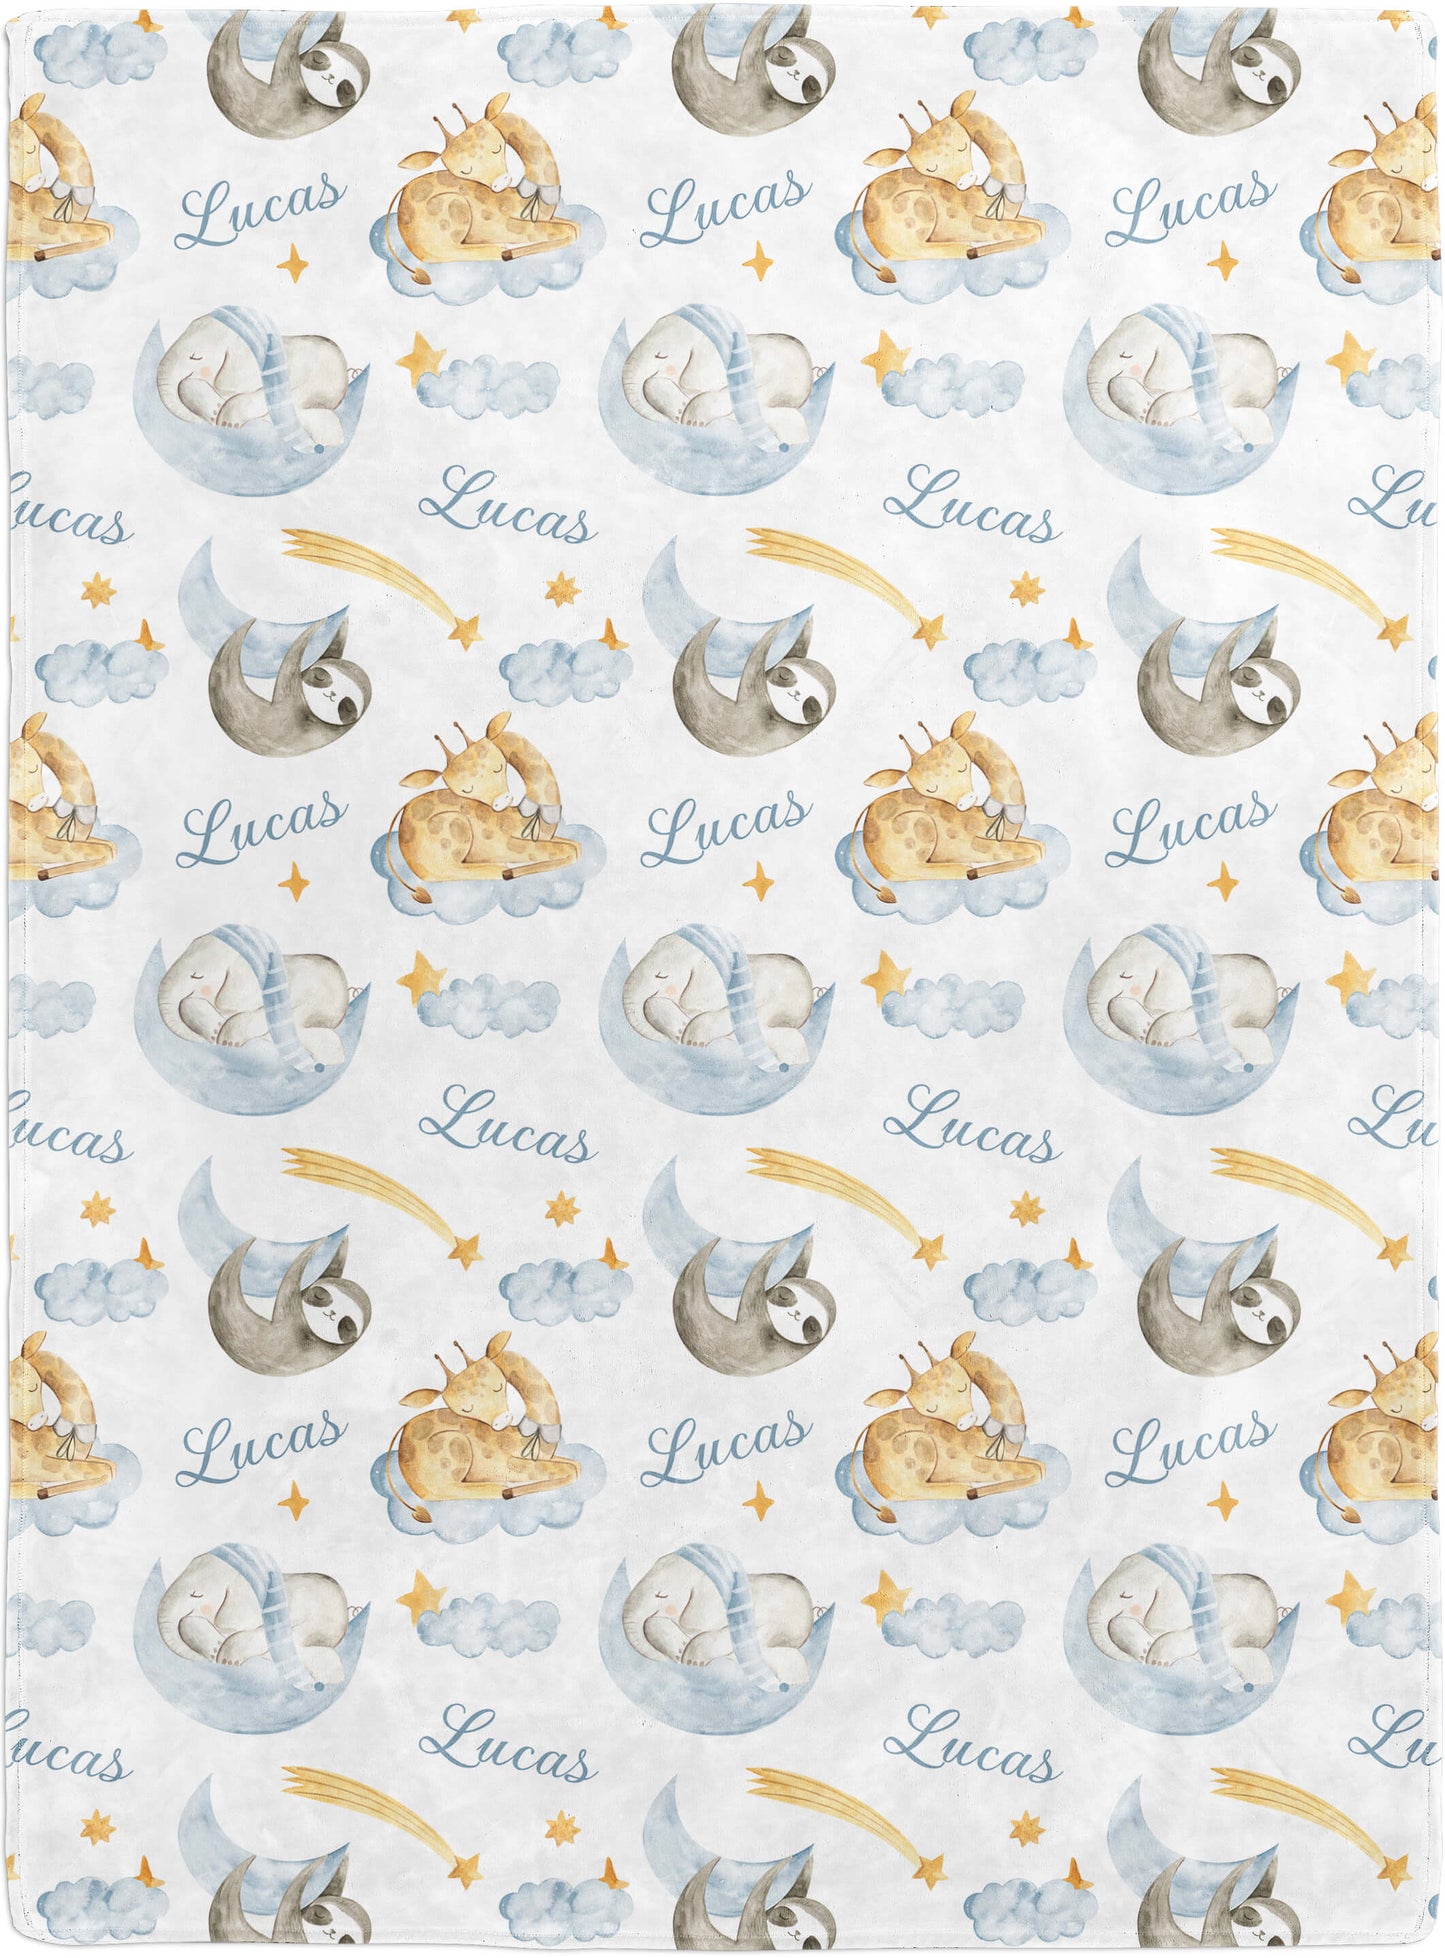 Sleeping Animals - Custom Name Blanket for Boys with Elephant and Giraffe, Baby Blue